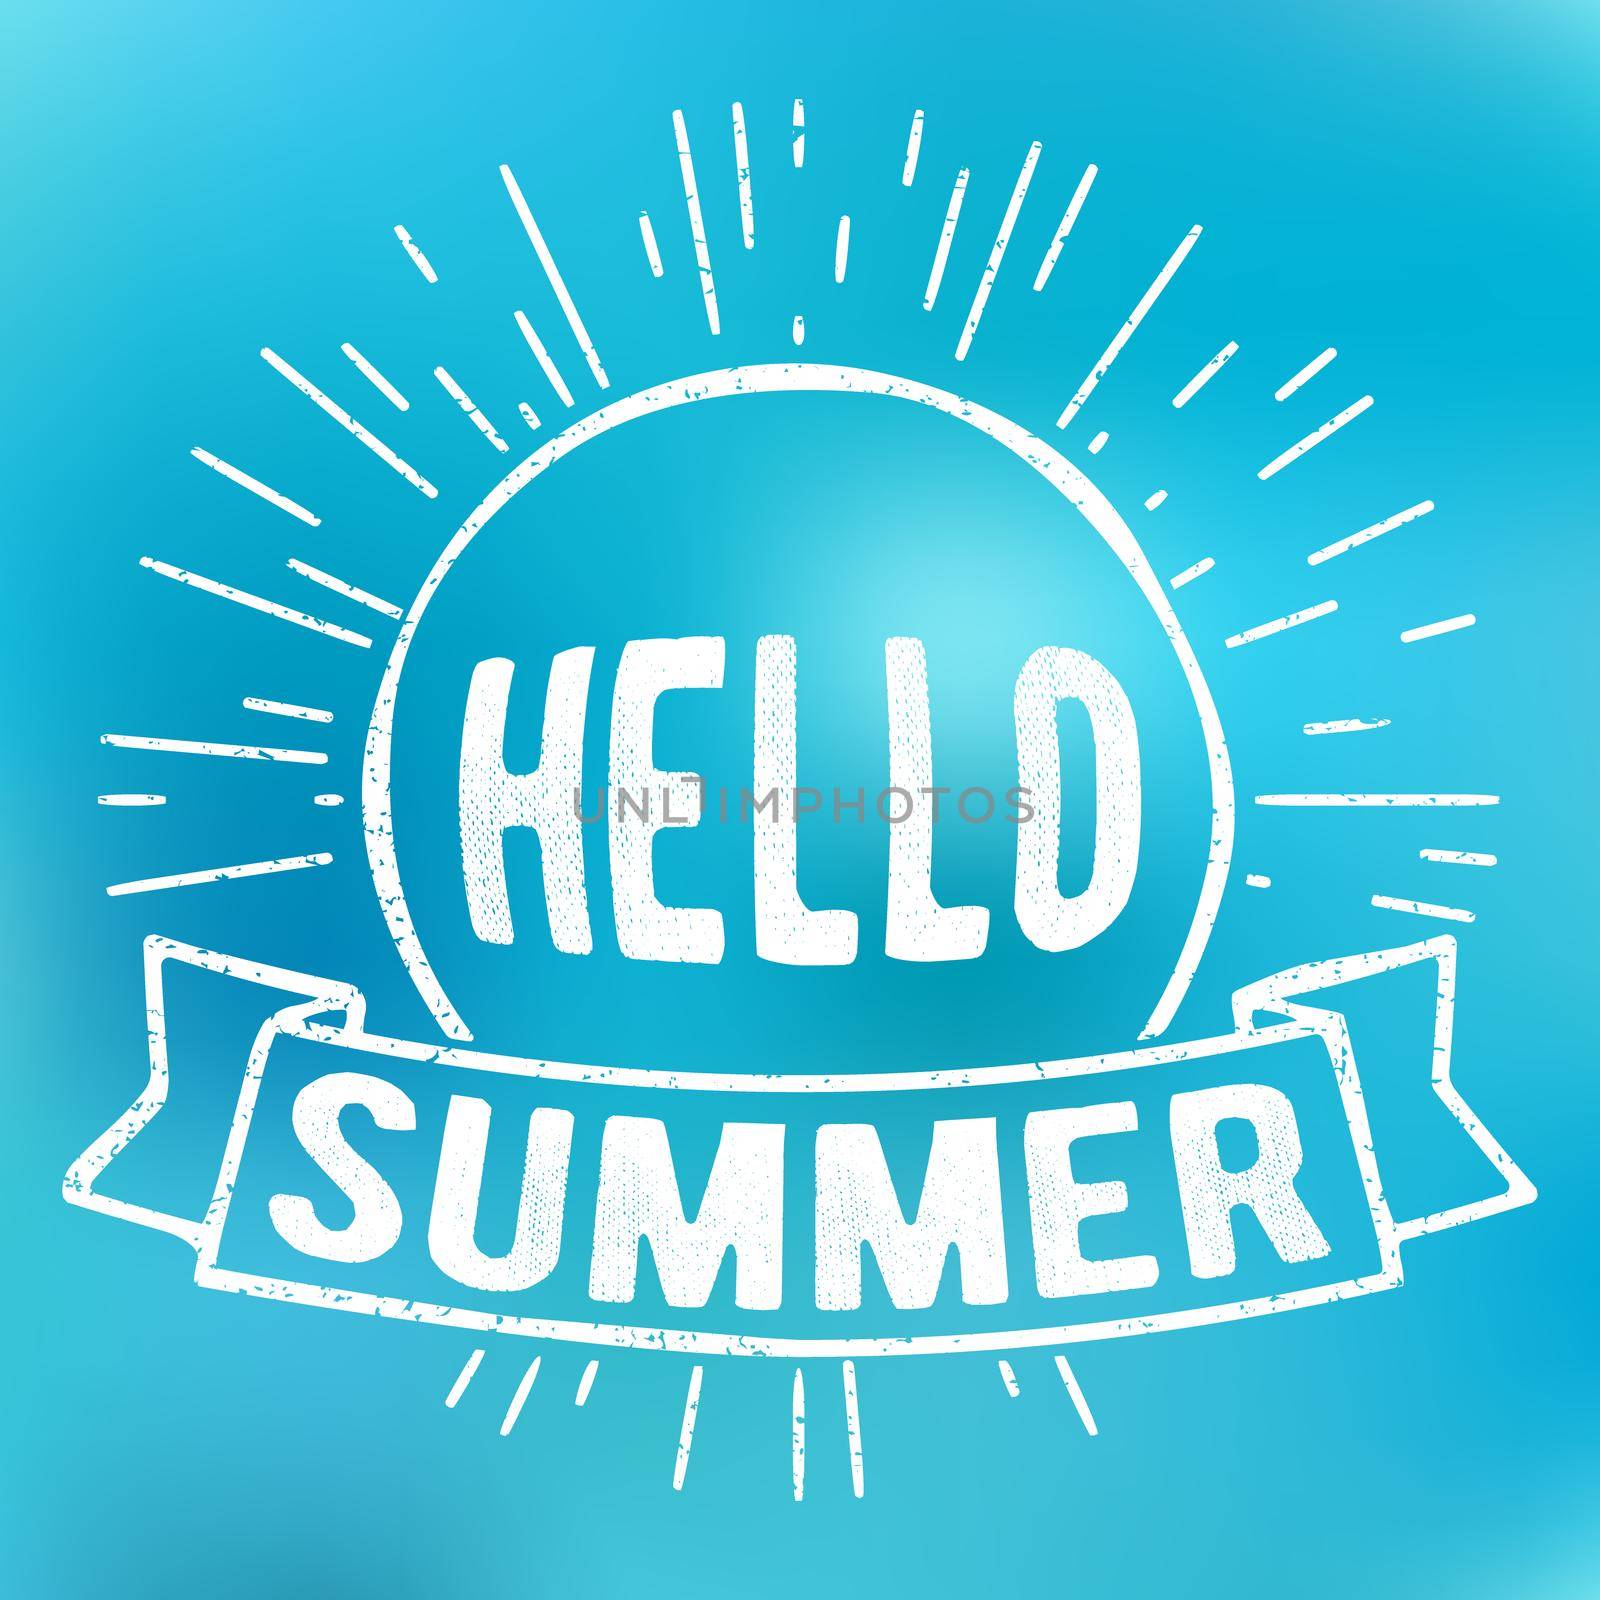 Hello summer stamp on blurred background. Vector illustration.